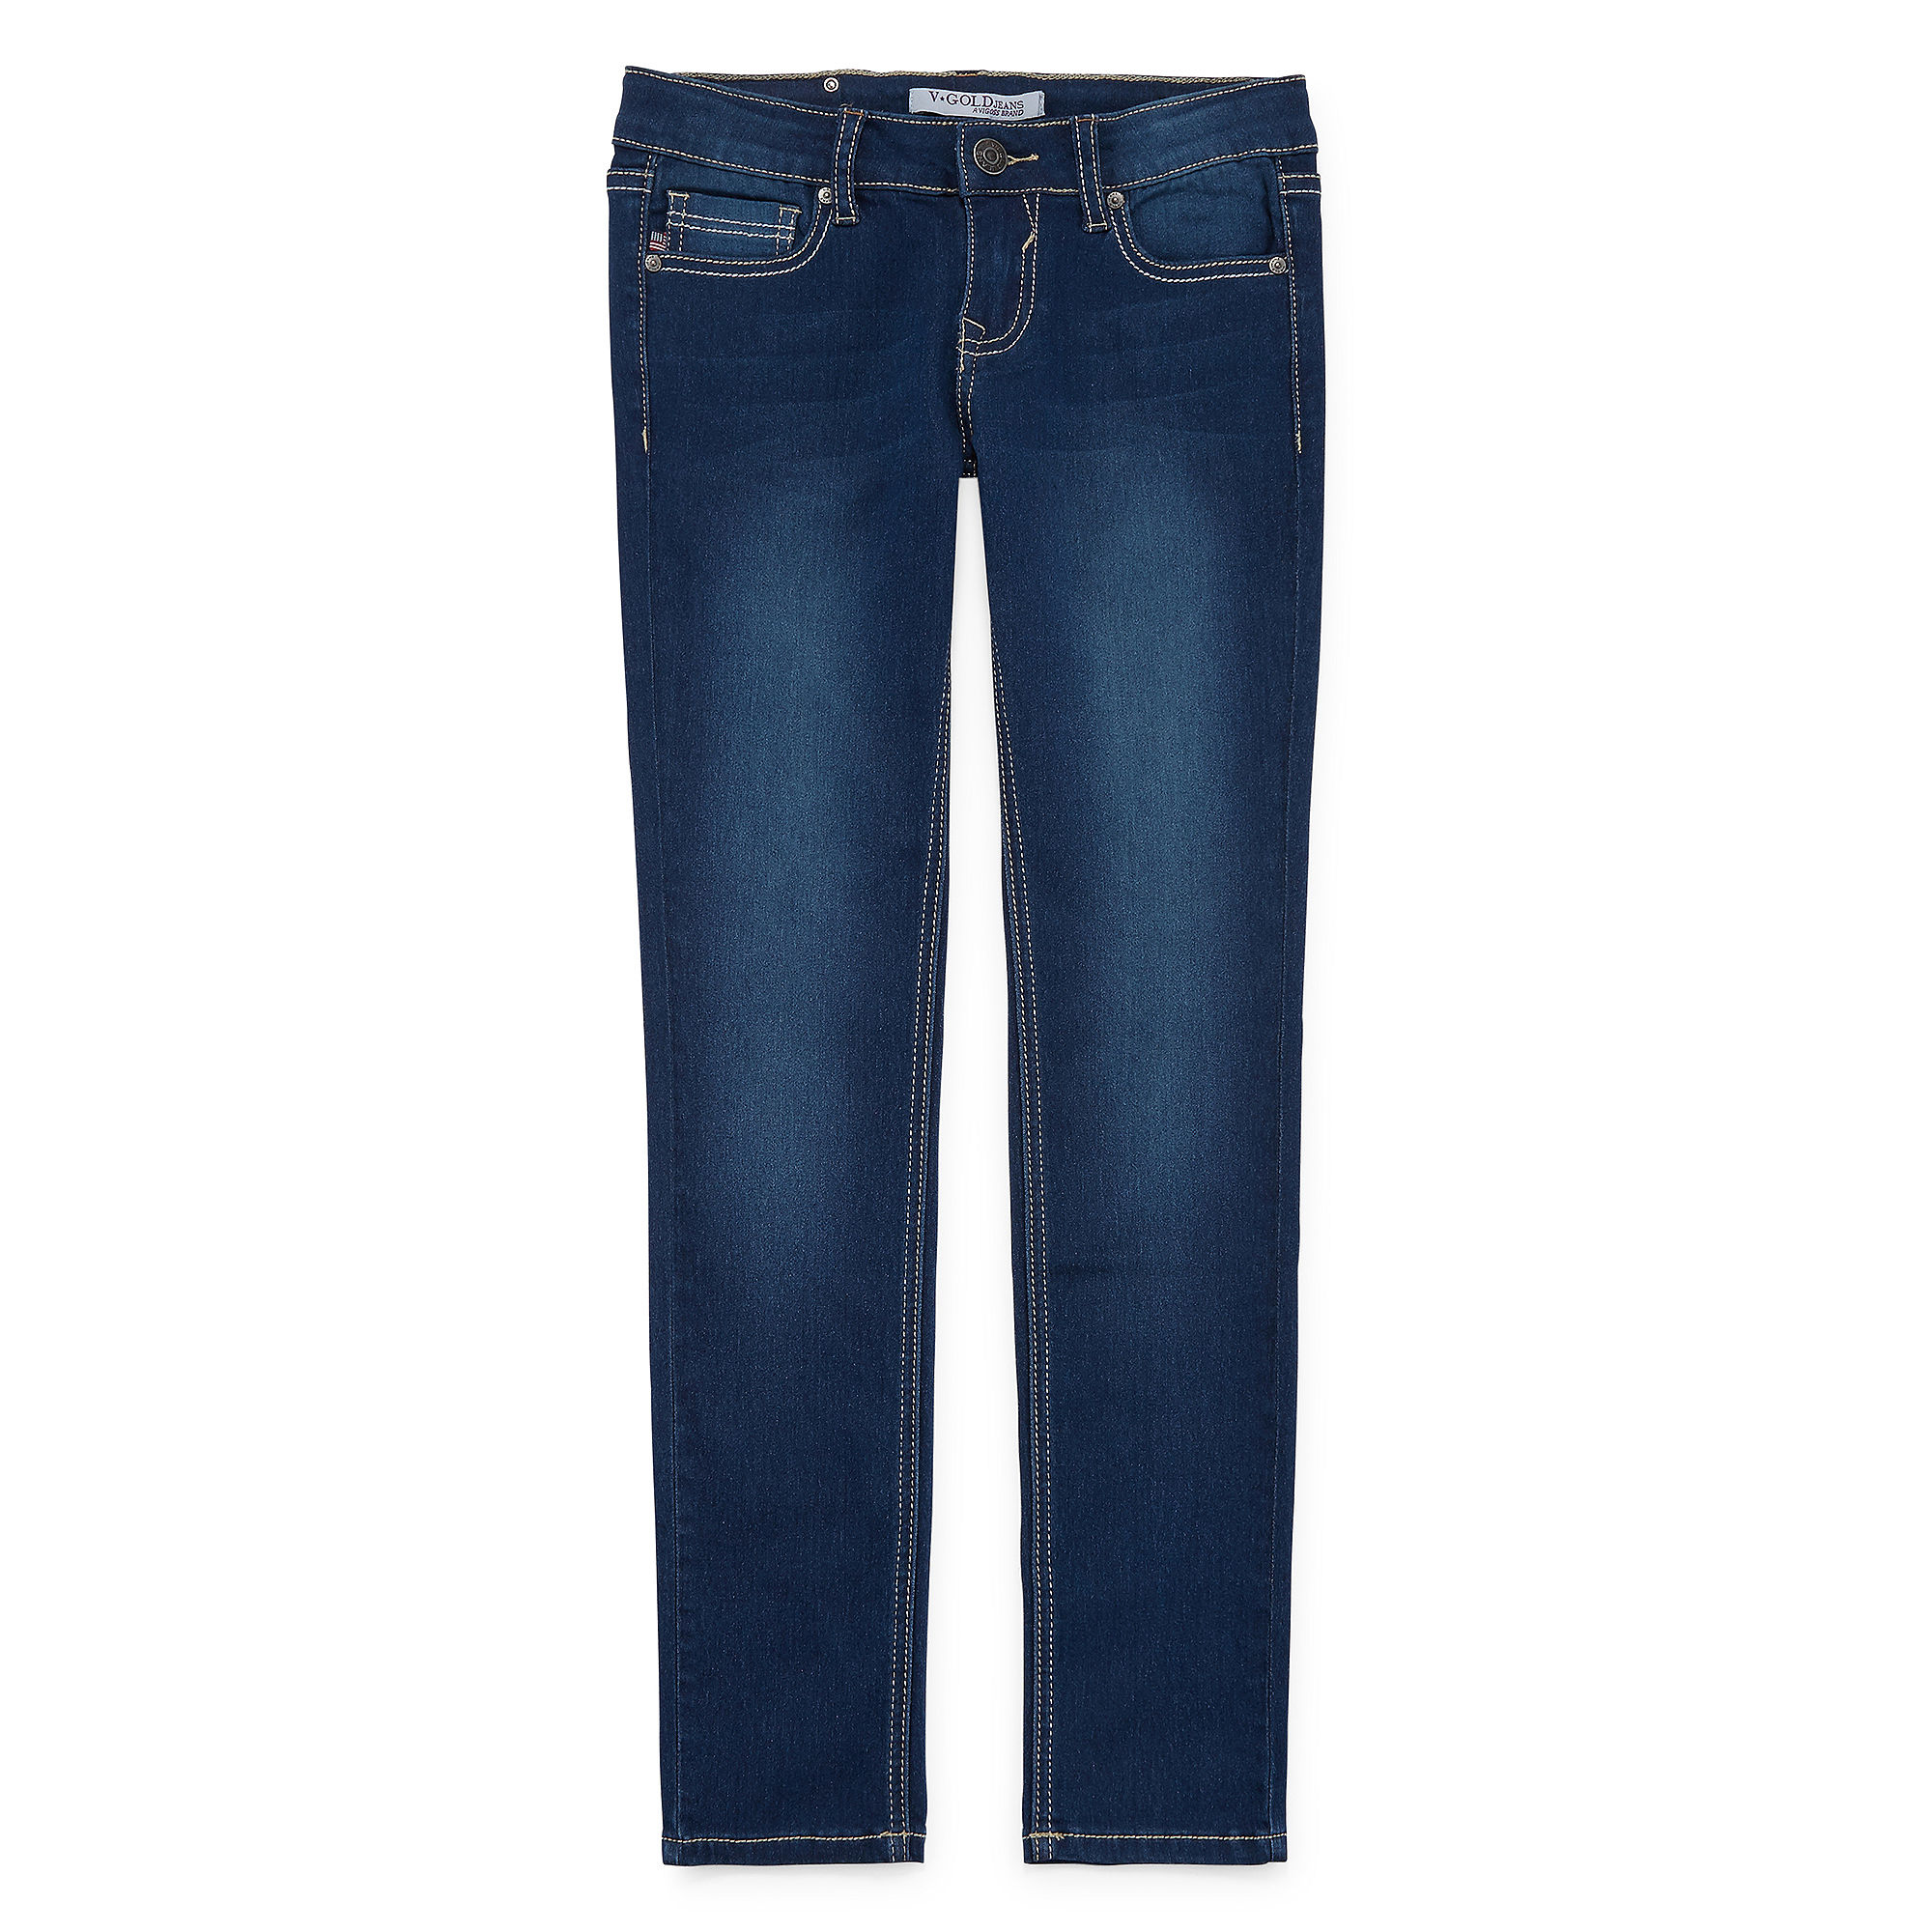 Girls Jeans - Sizes 7 - 16 | Jeans Hub